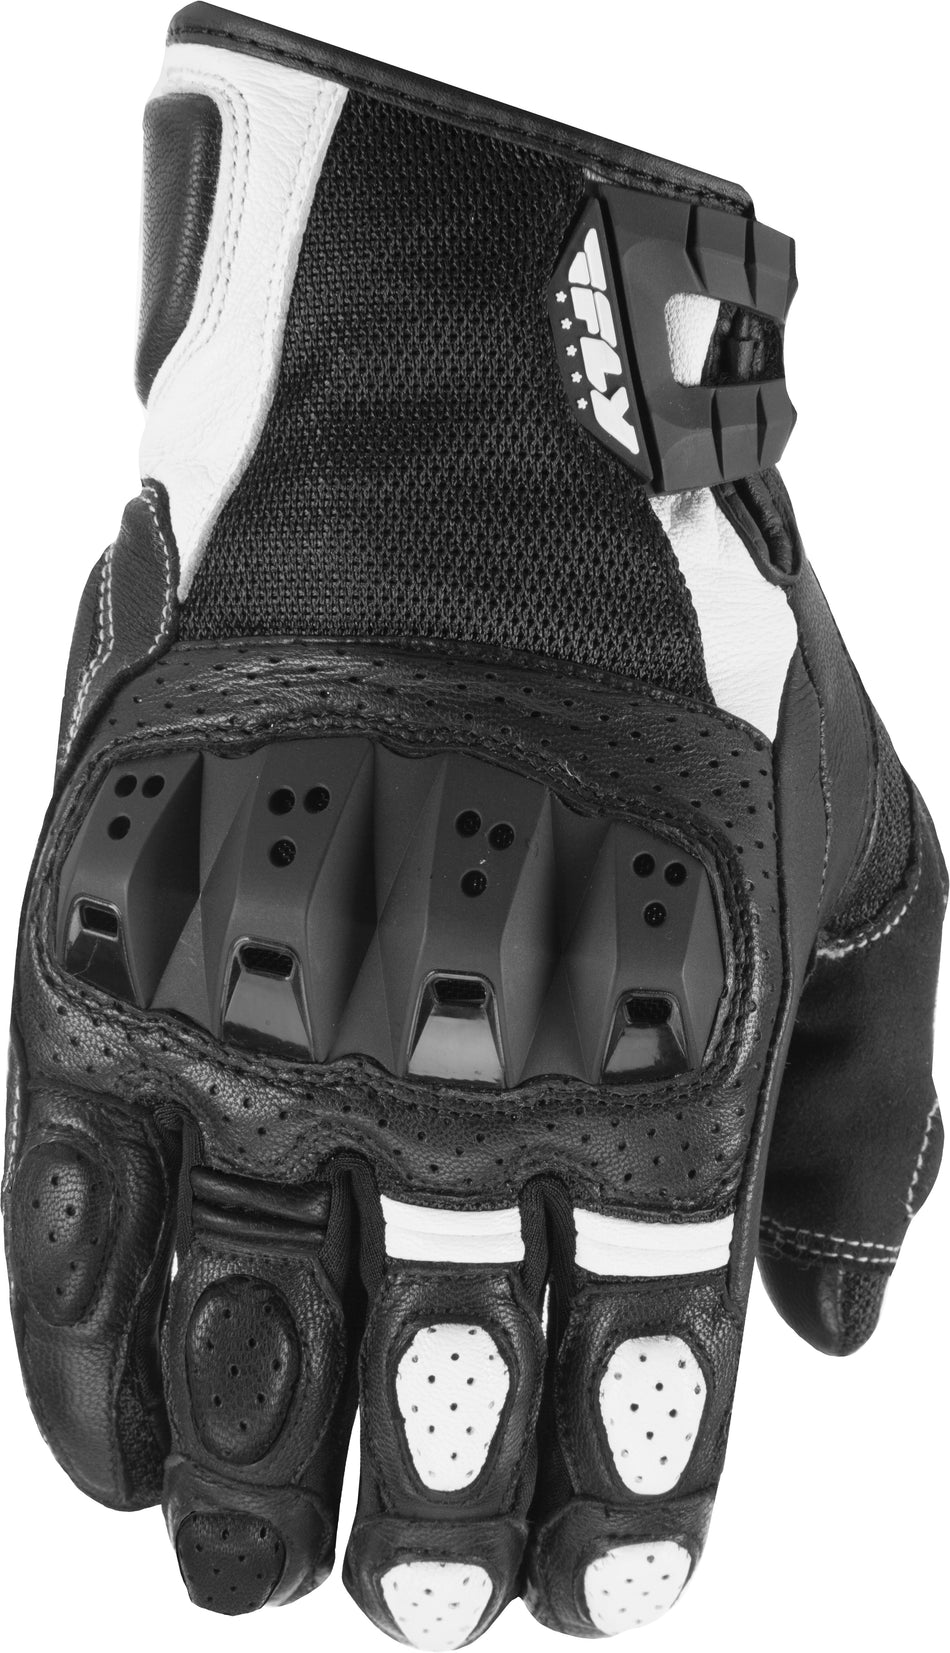 FLY RACING Brawler Gloves Black/White Md #5884 476-2045~3